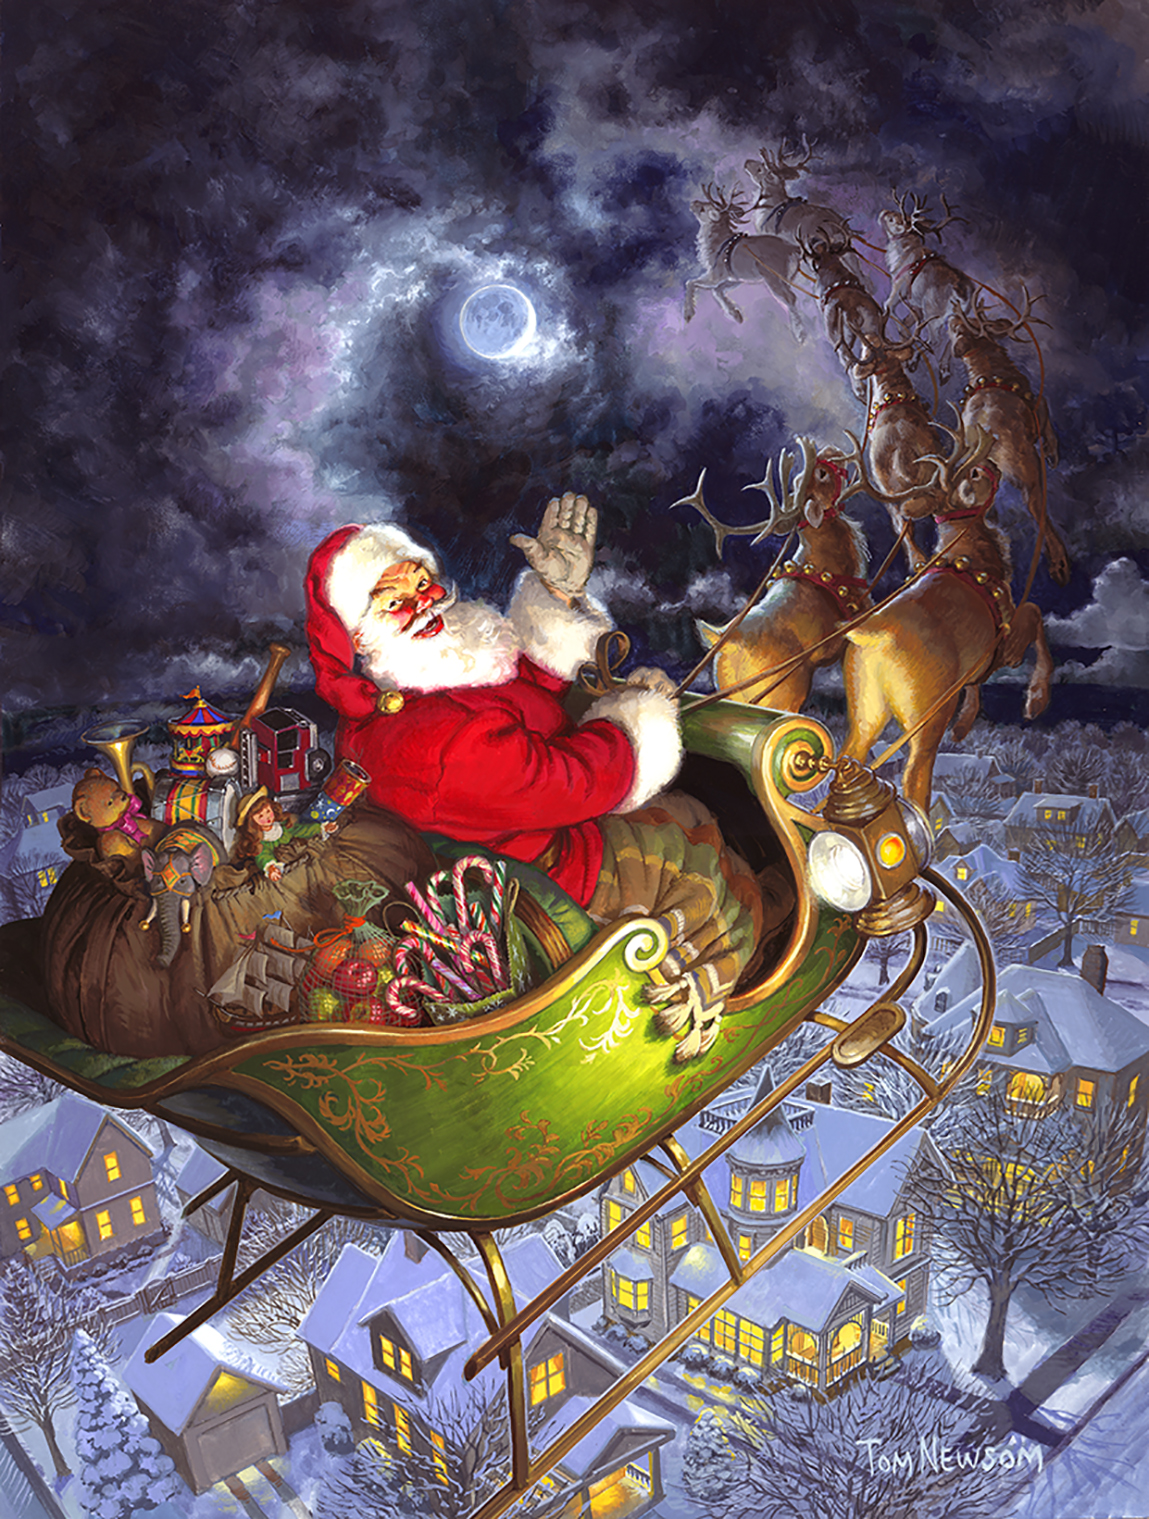 Santa flies over a village on his Christmas night journey!